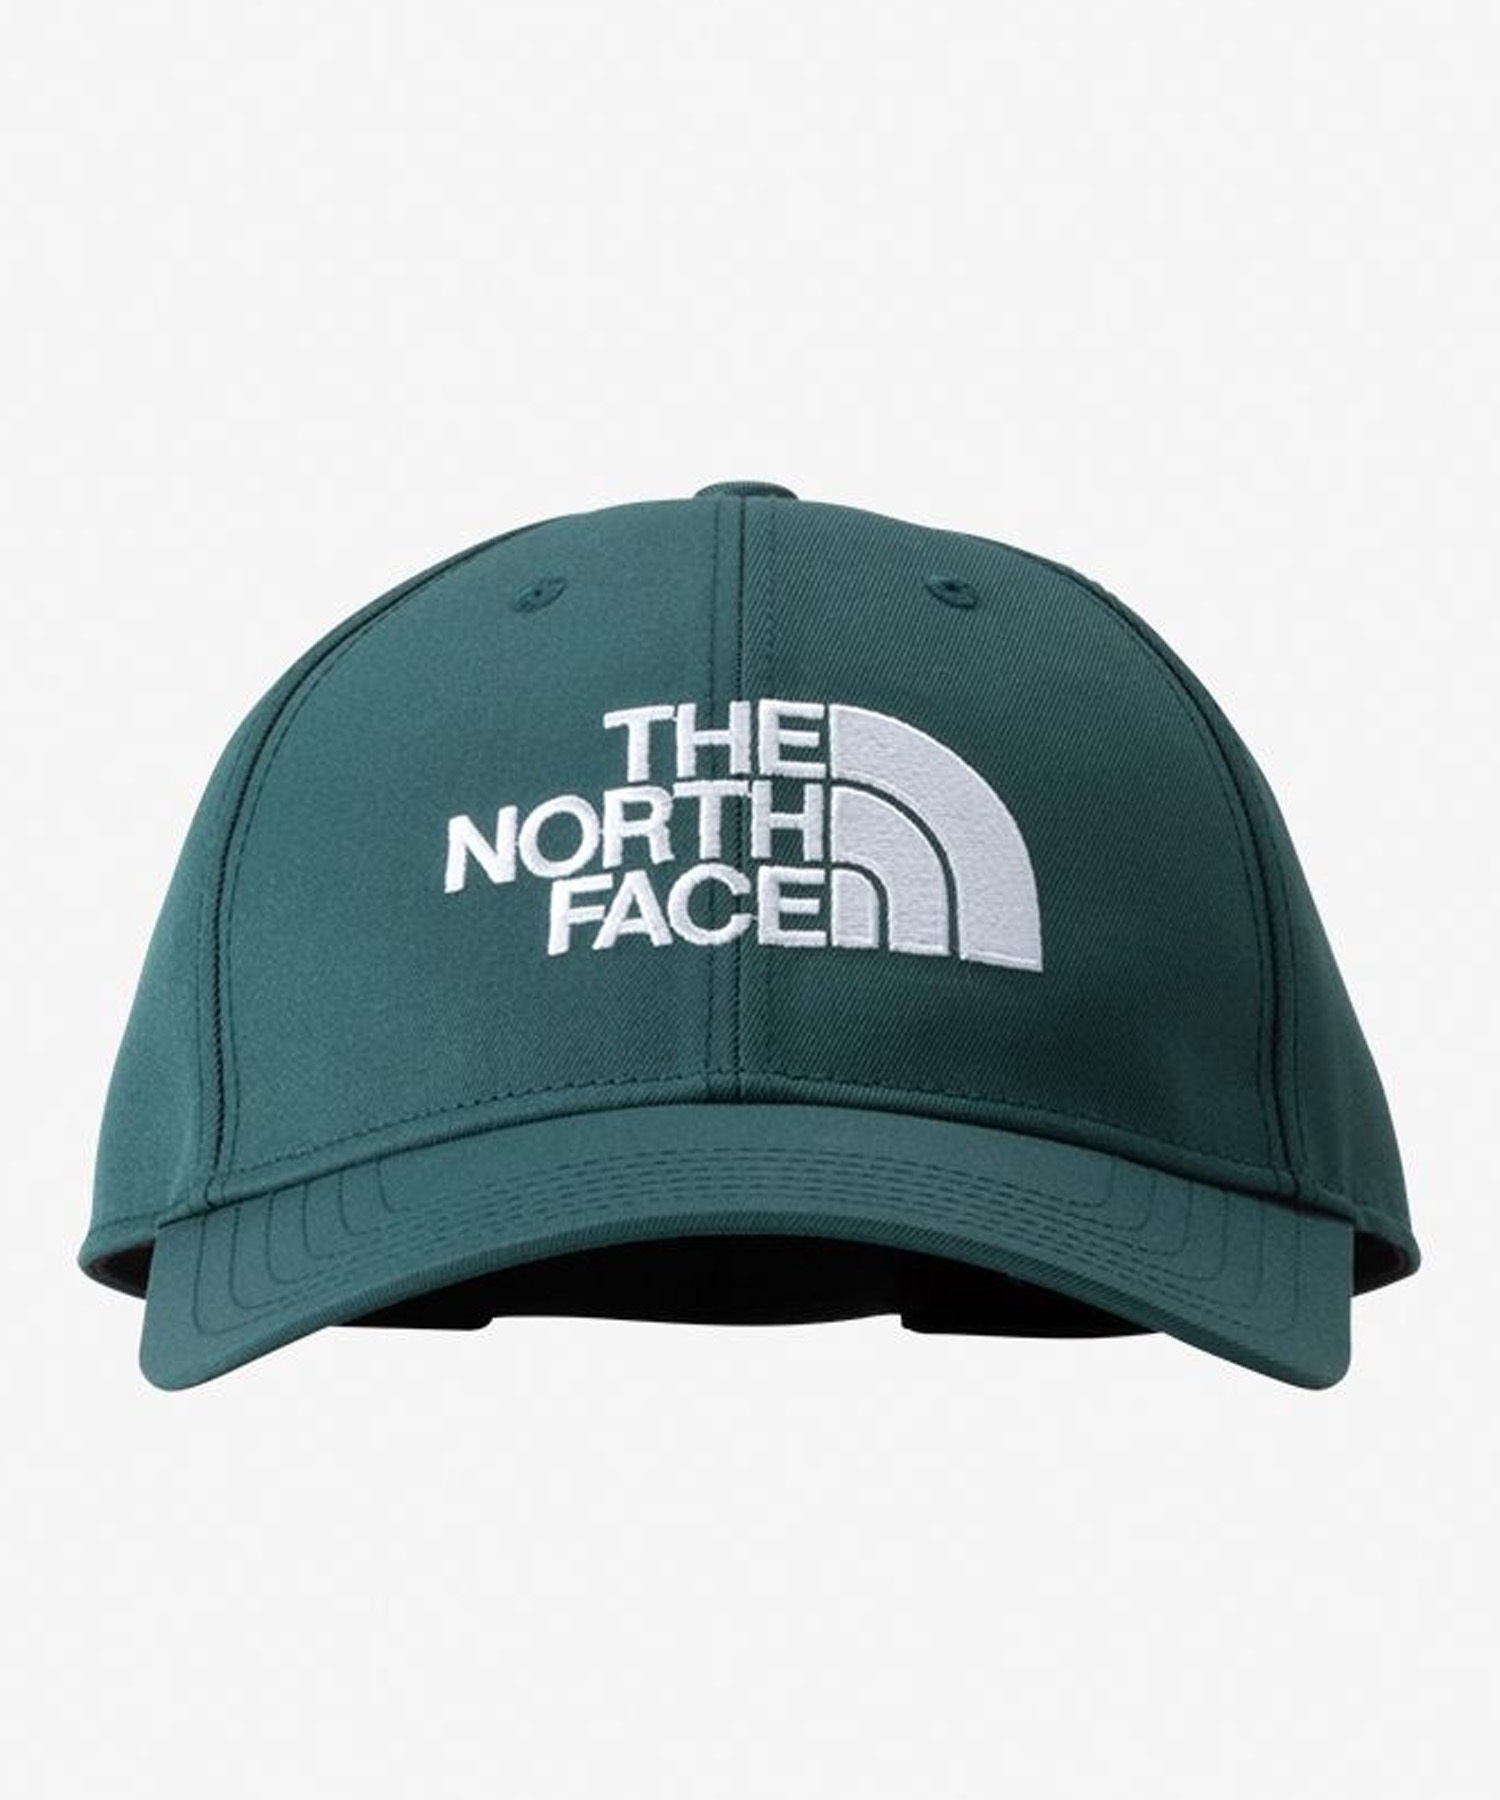 THE NORTH FACE/ザ・ノース・フェイス Kids' TNF Logo Cap キッズ TNF